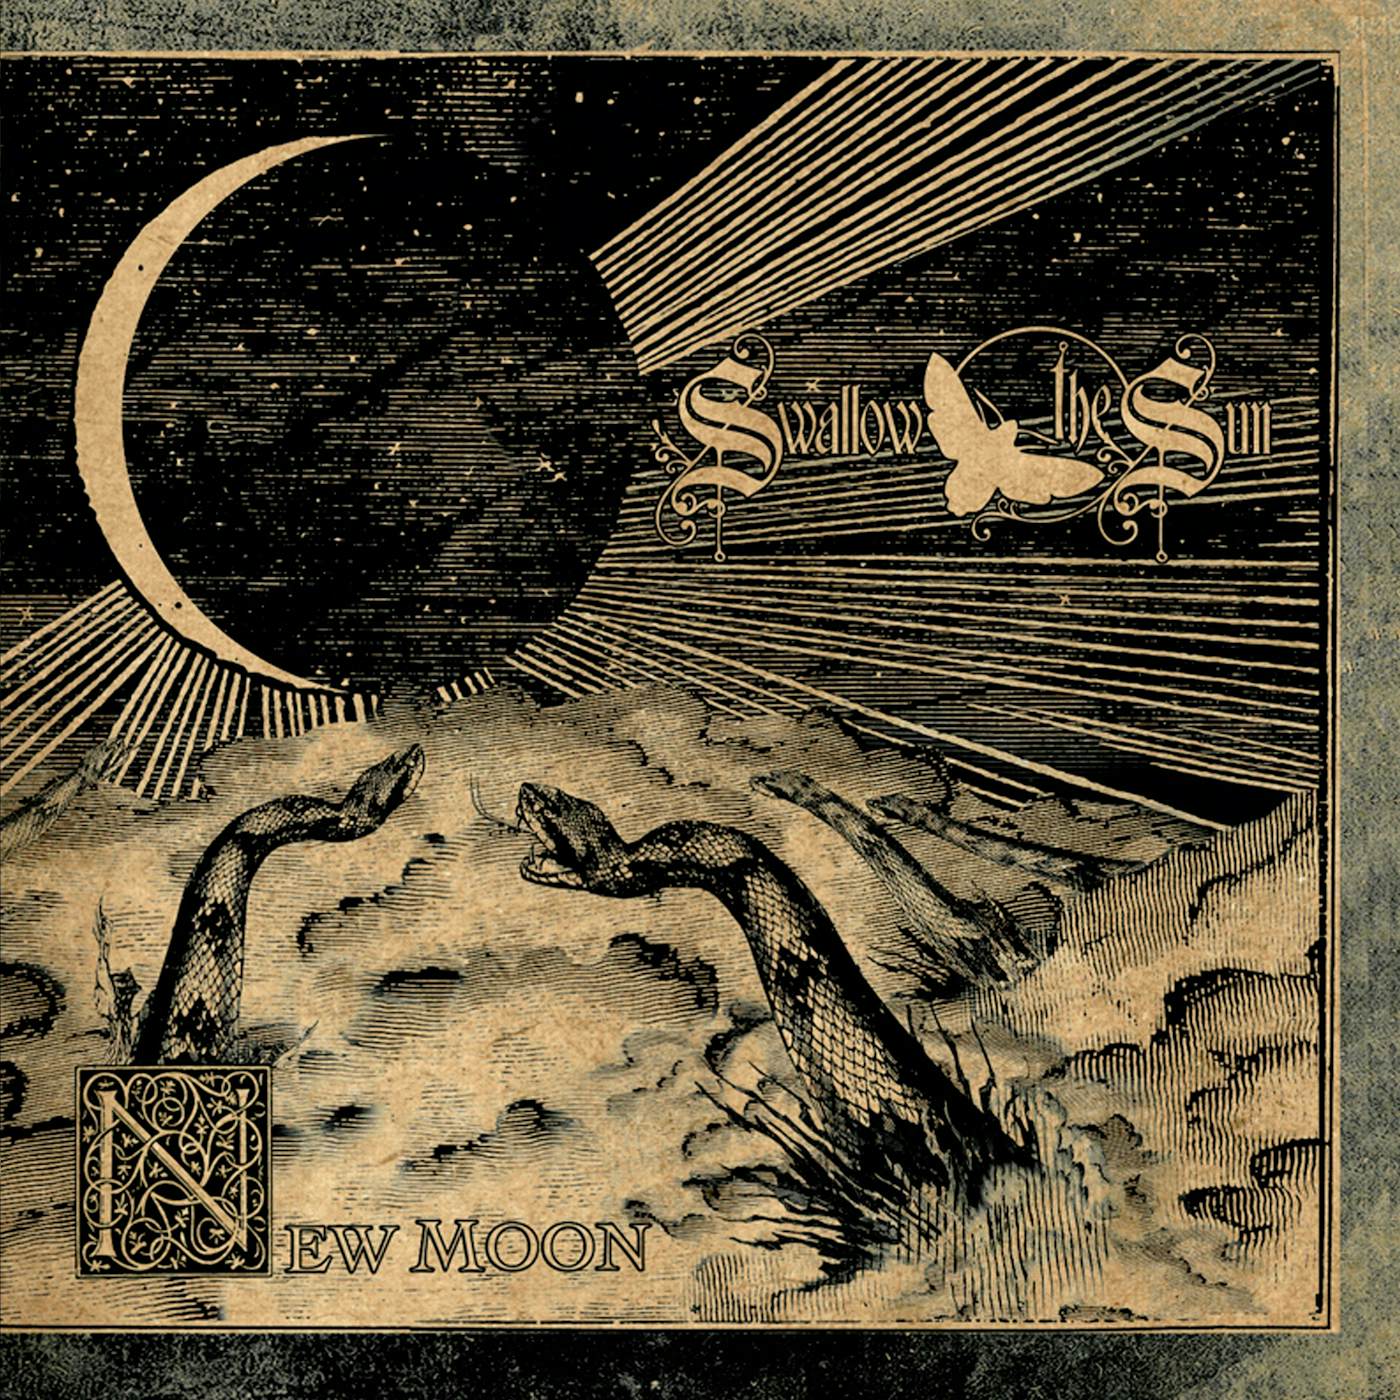 Swallow The Sun "New Moon" CD